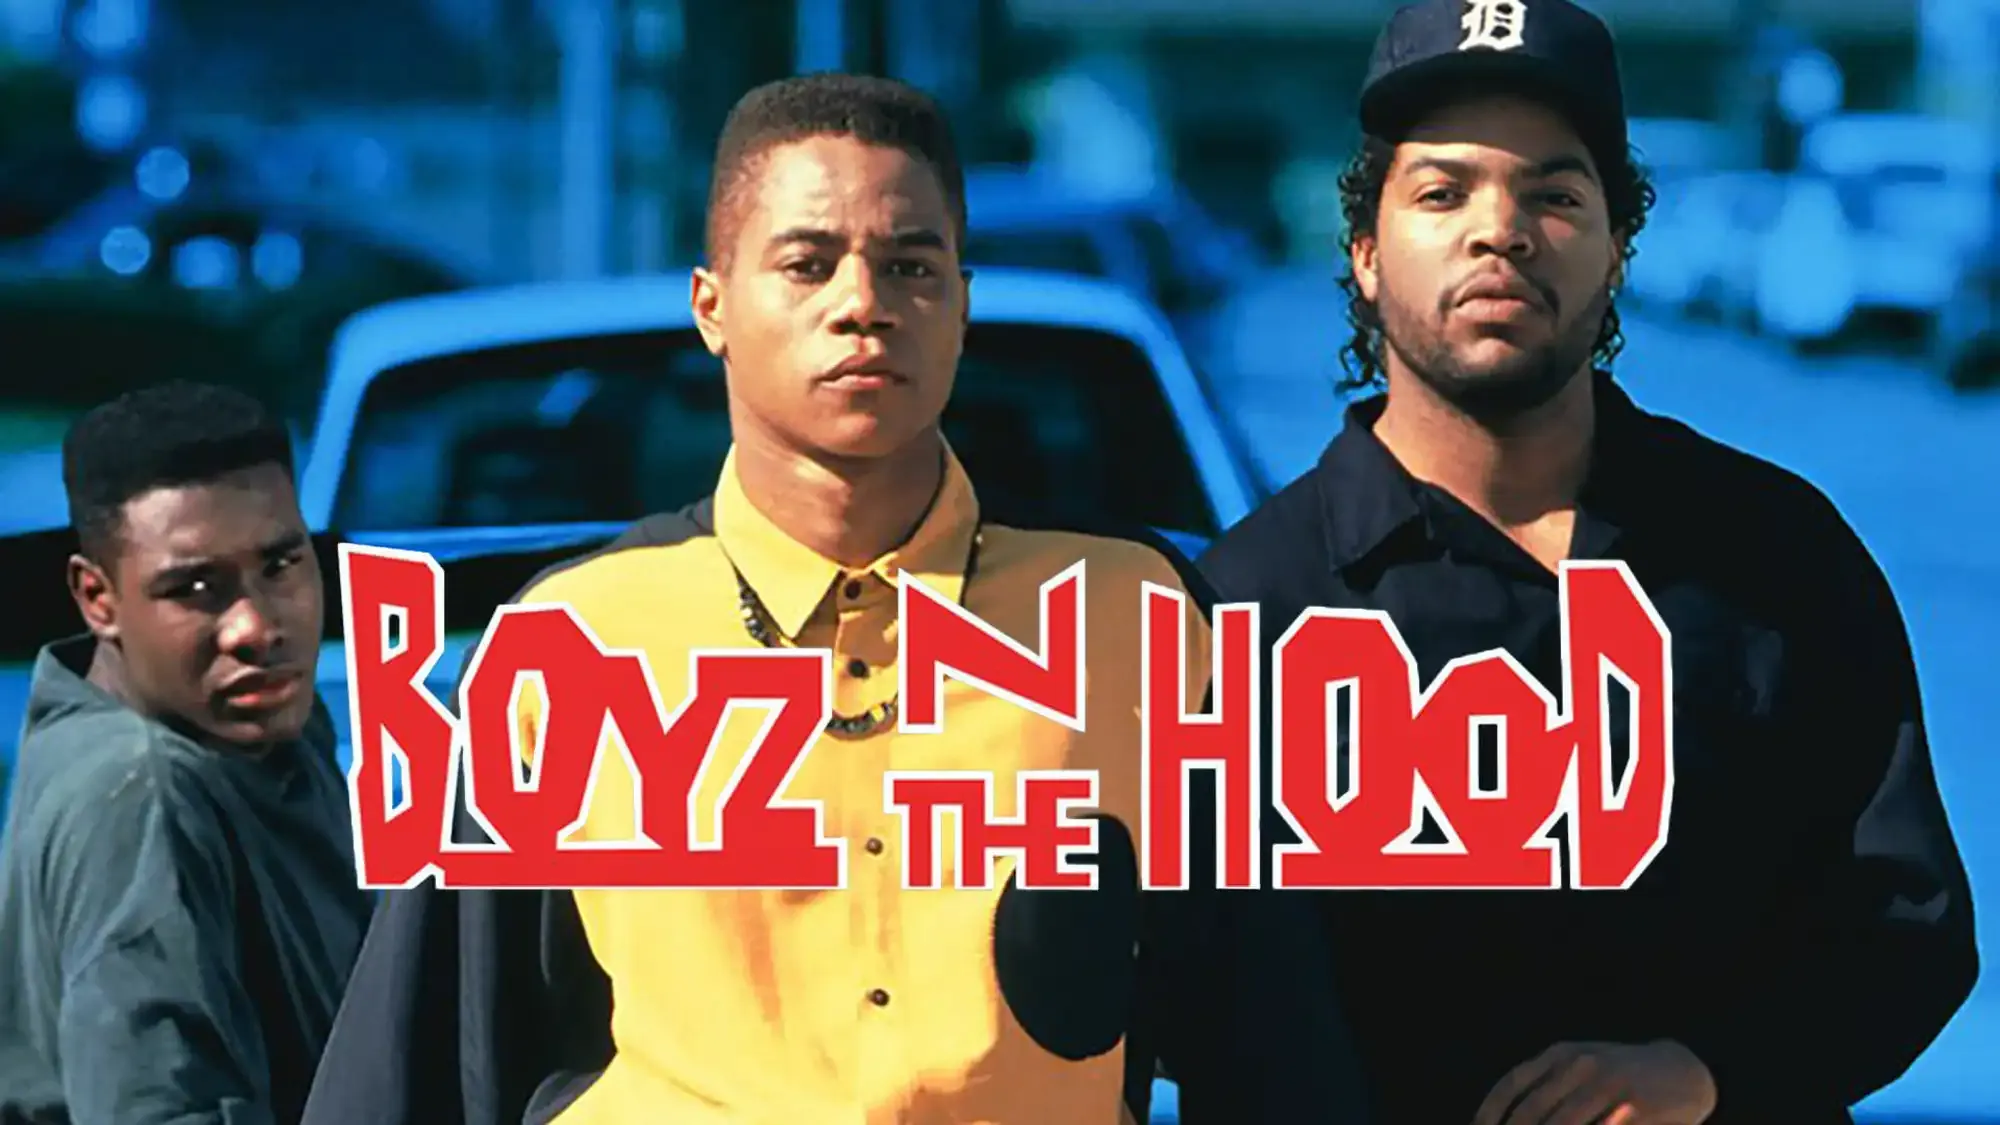 Boyz n the Hood movie review